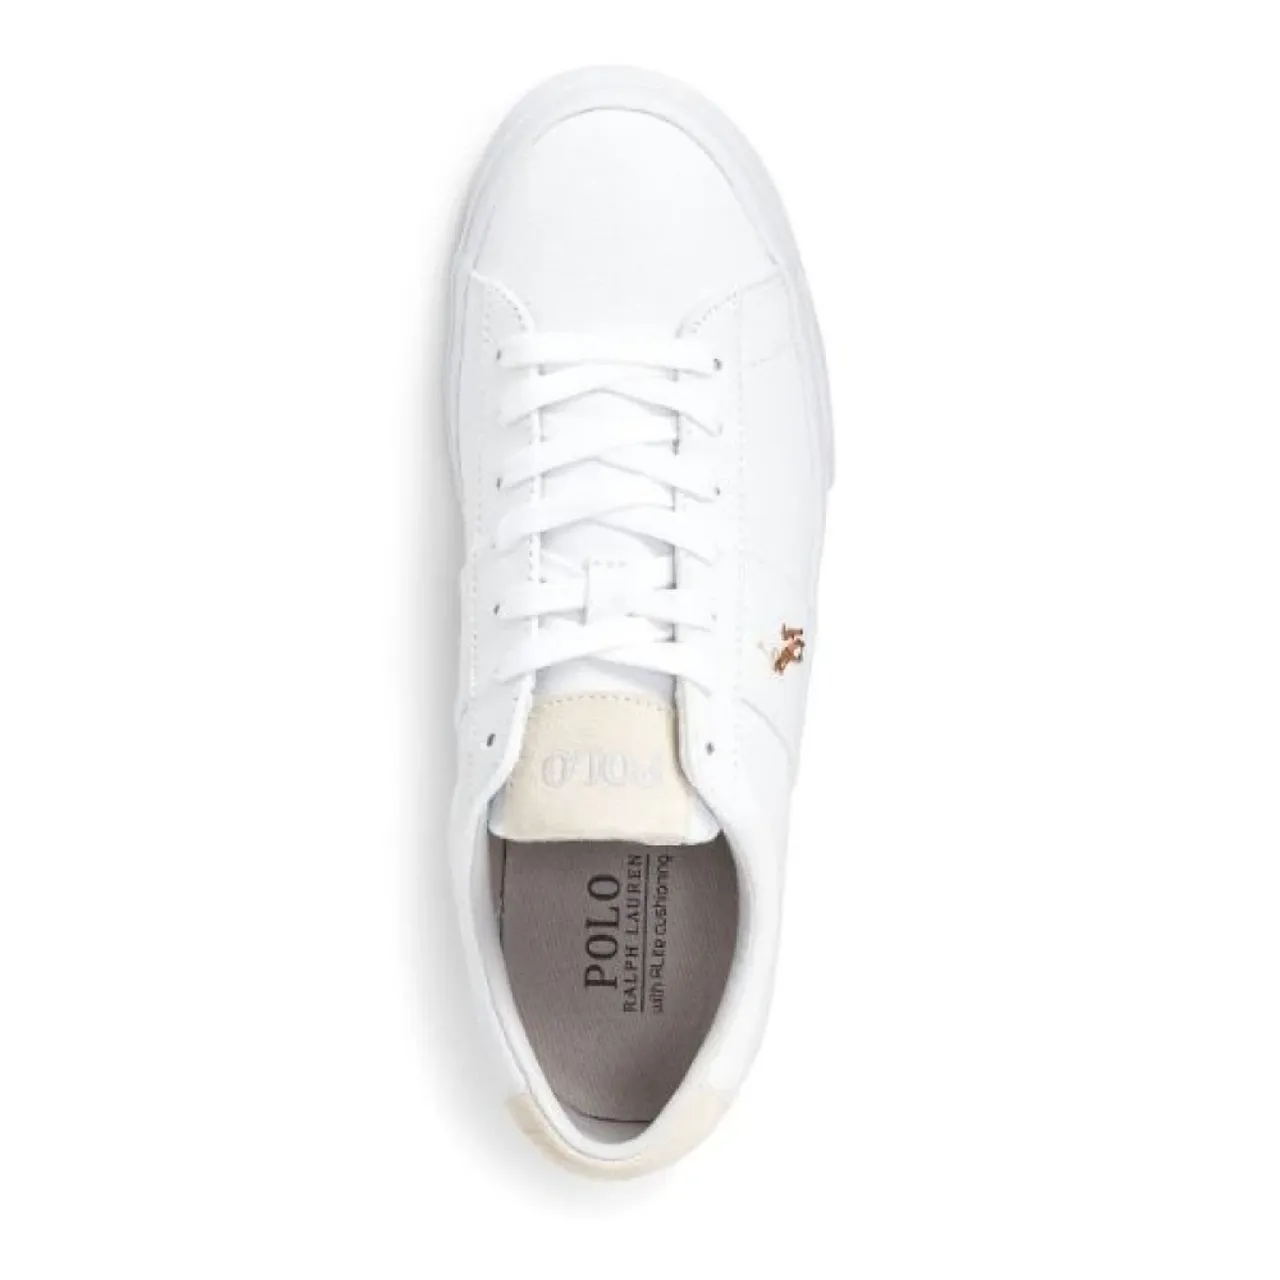 Weiße Sayer Canvas Sneaker Schuhe Polo Ralph Lauren